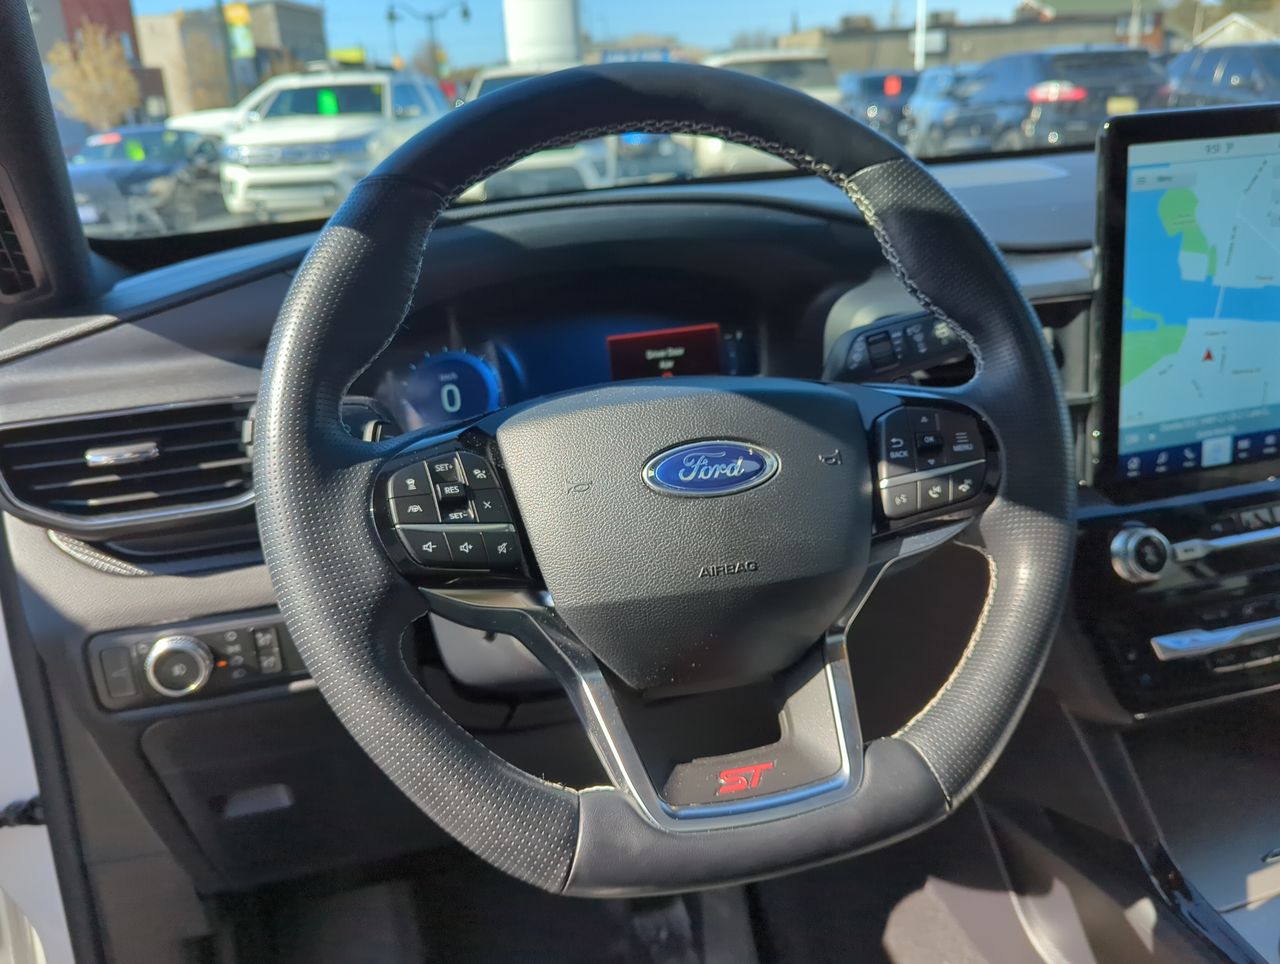 2021 Ford Explorer - 21590A Full Image 14